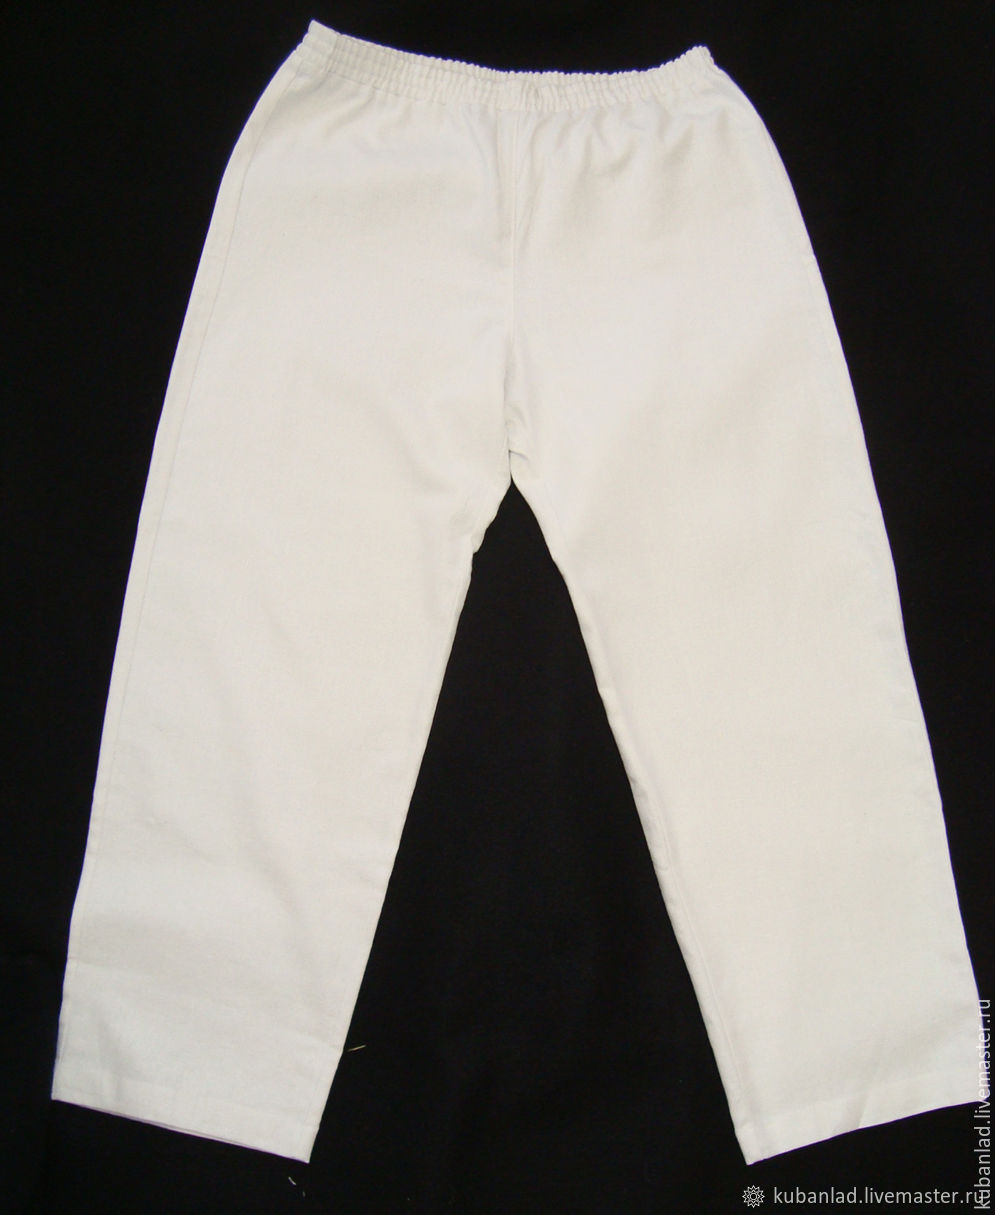 Linen trousers for men, Costumes3, Starominskaya,  Фото №1